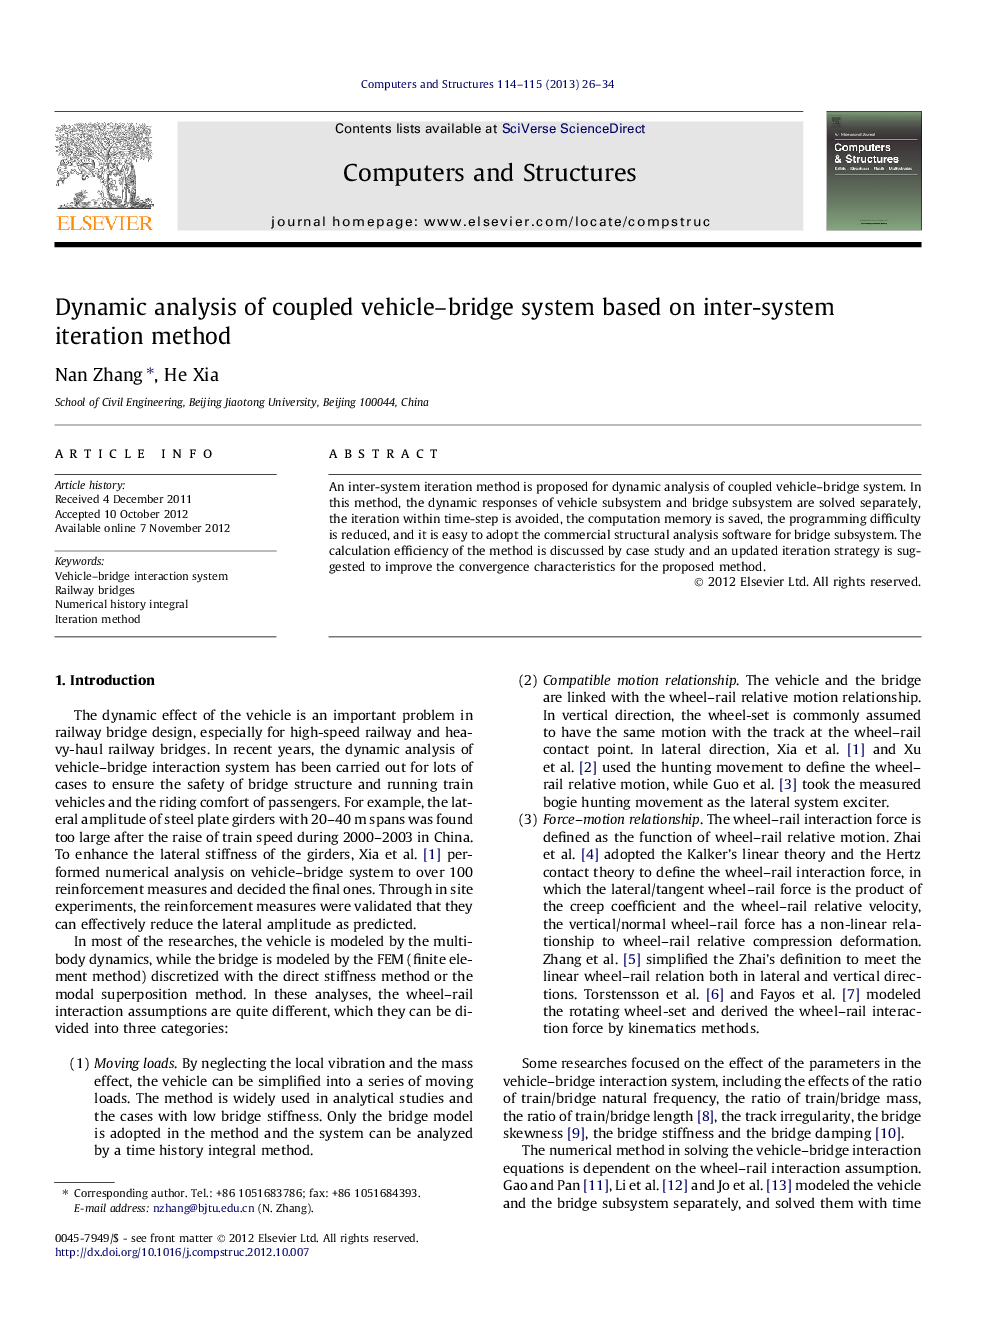 Dynamic analysis of coupled vehicle–bridge system based on inter-system iteration method